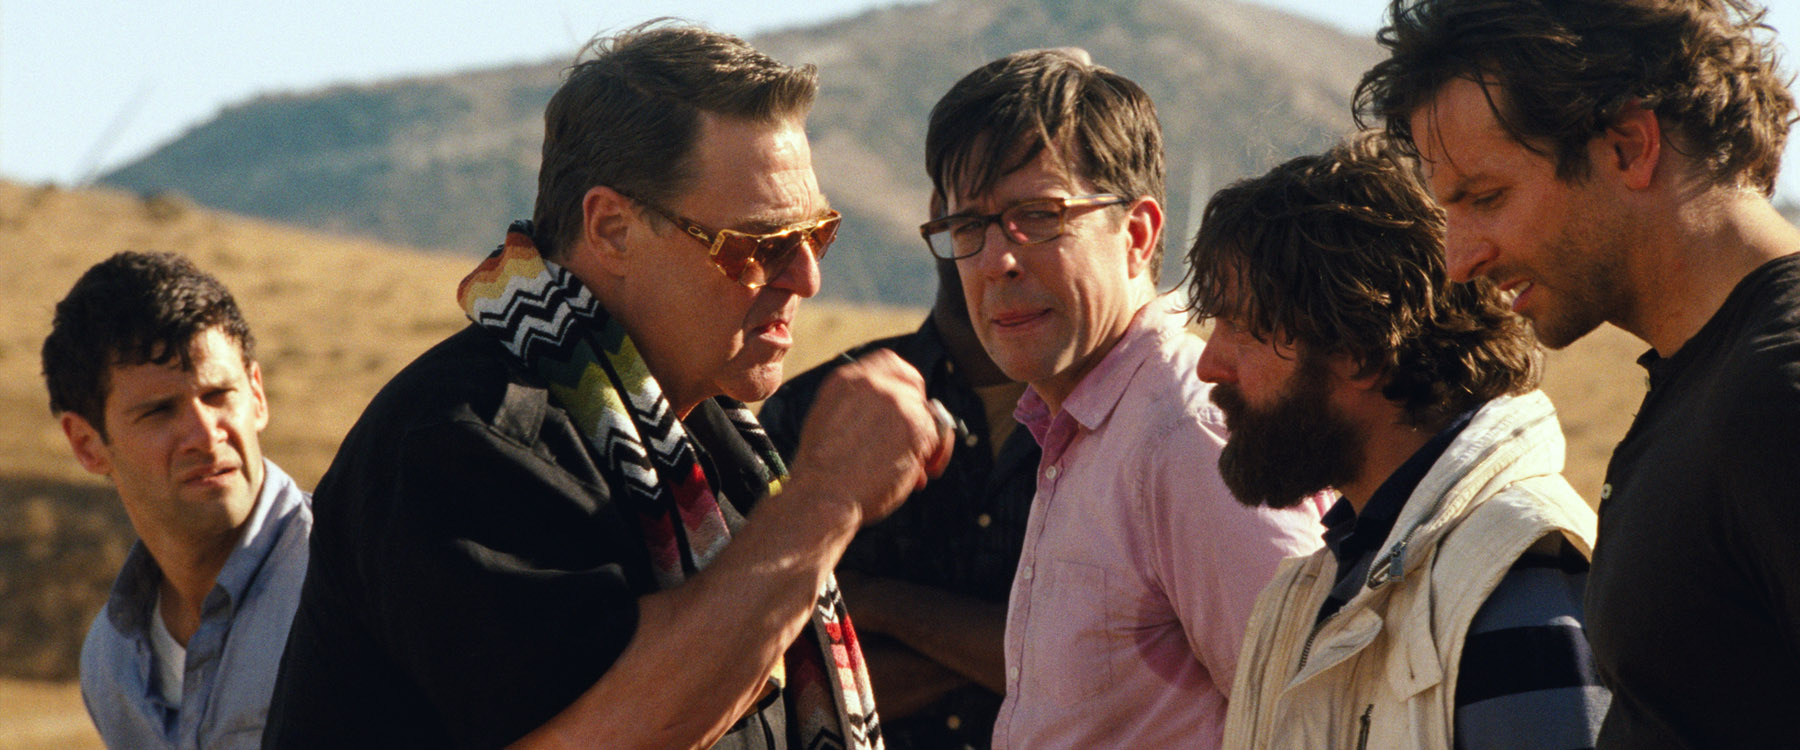 Still of John Goodman, Justin Bartha, Bradley Cooper, Zach Galifianakis and Ed Helms in Pagirios 3: velniai zino kur (2013)